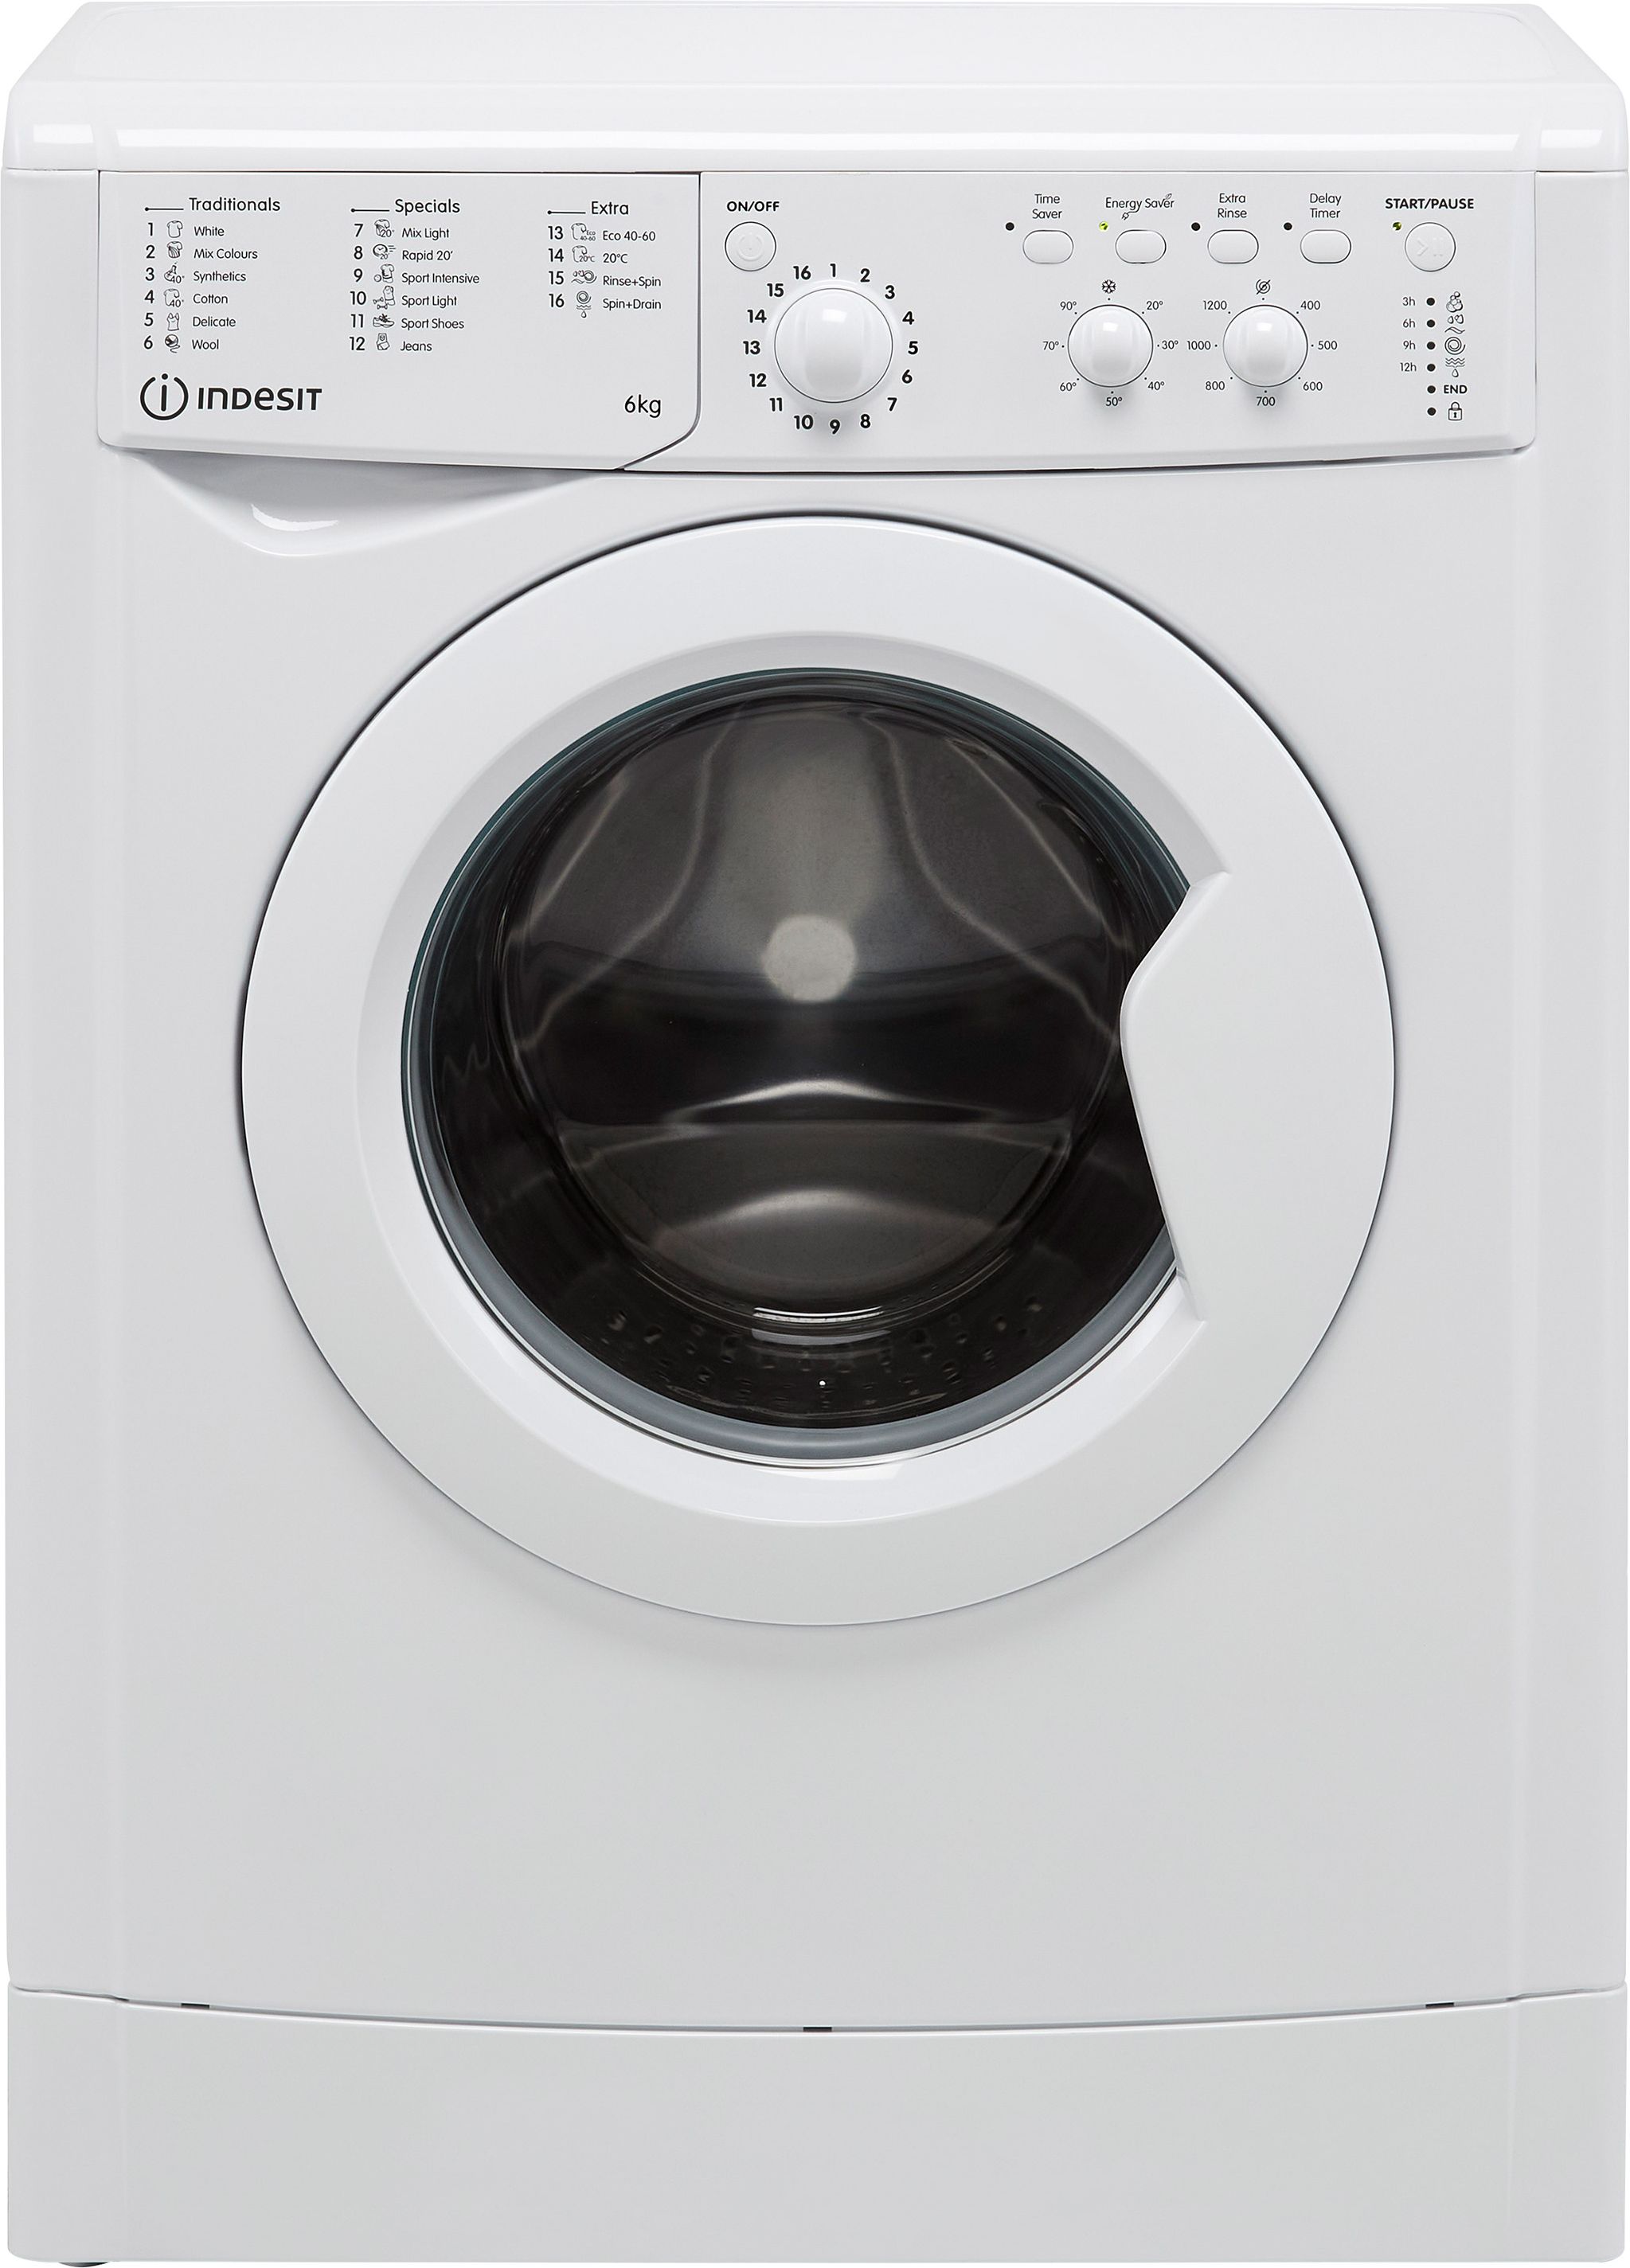 Indesit IWSC61251WUKN 6kg Washing Machine with 1200 rpm - White - F Rated, White